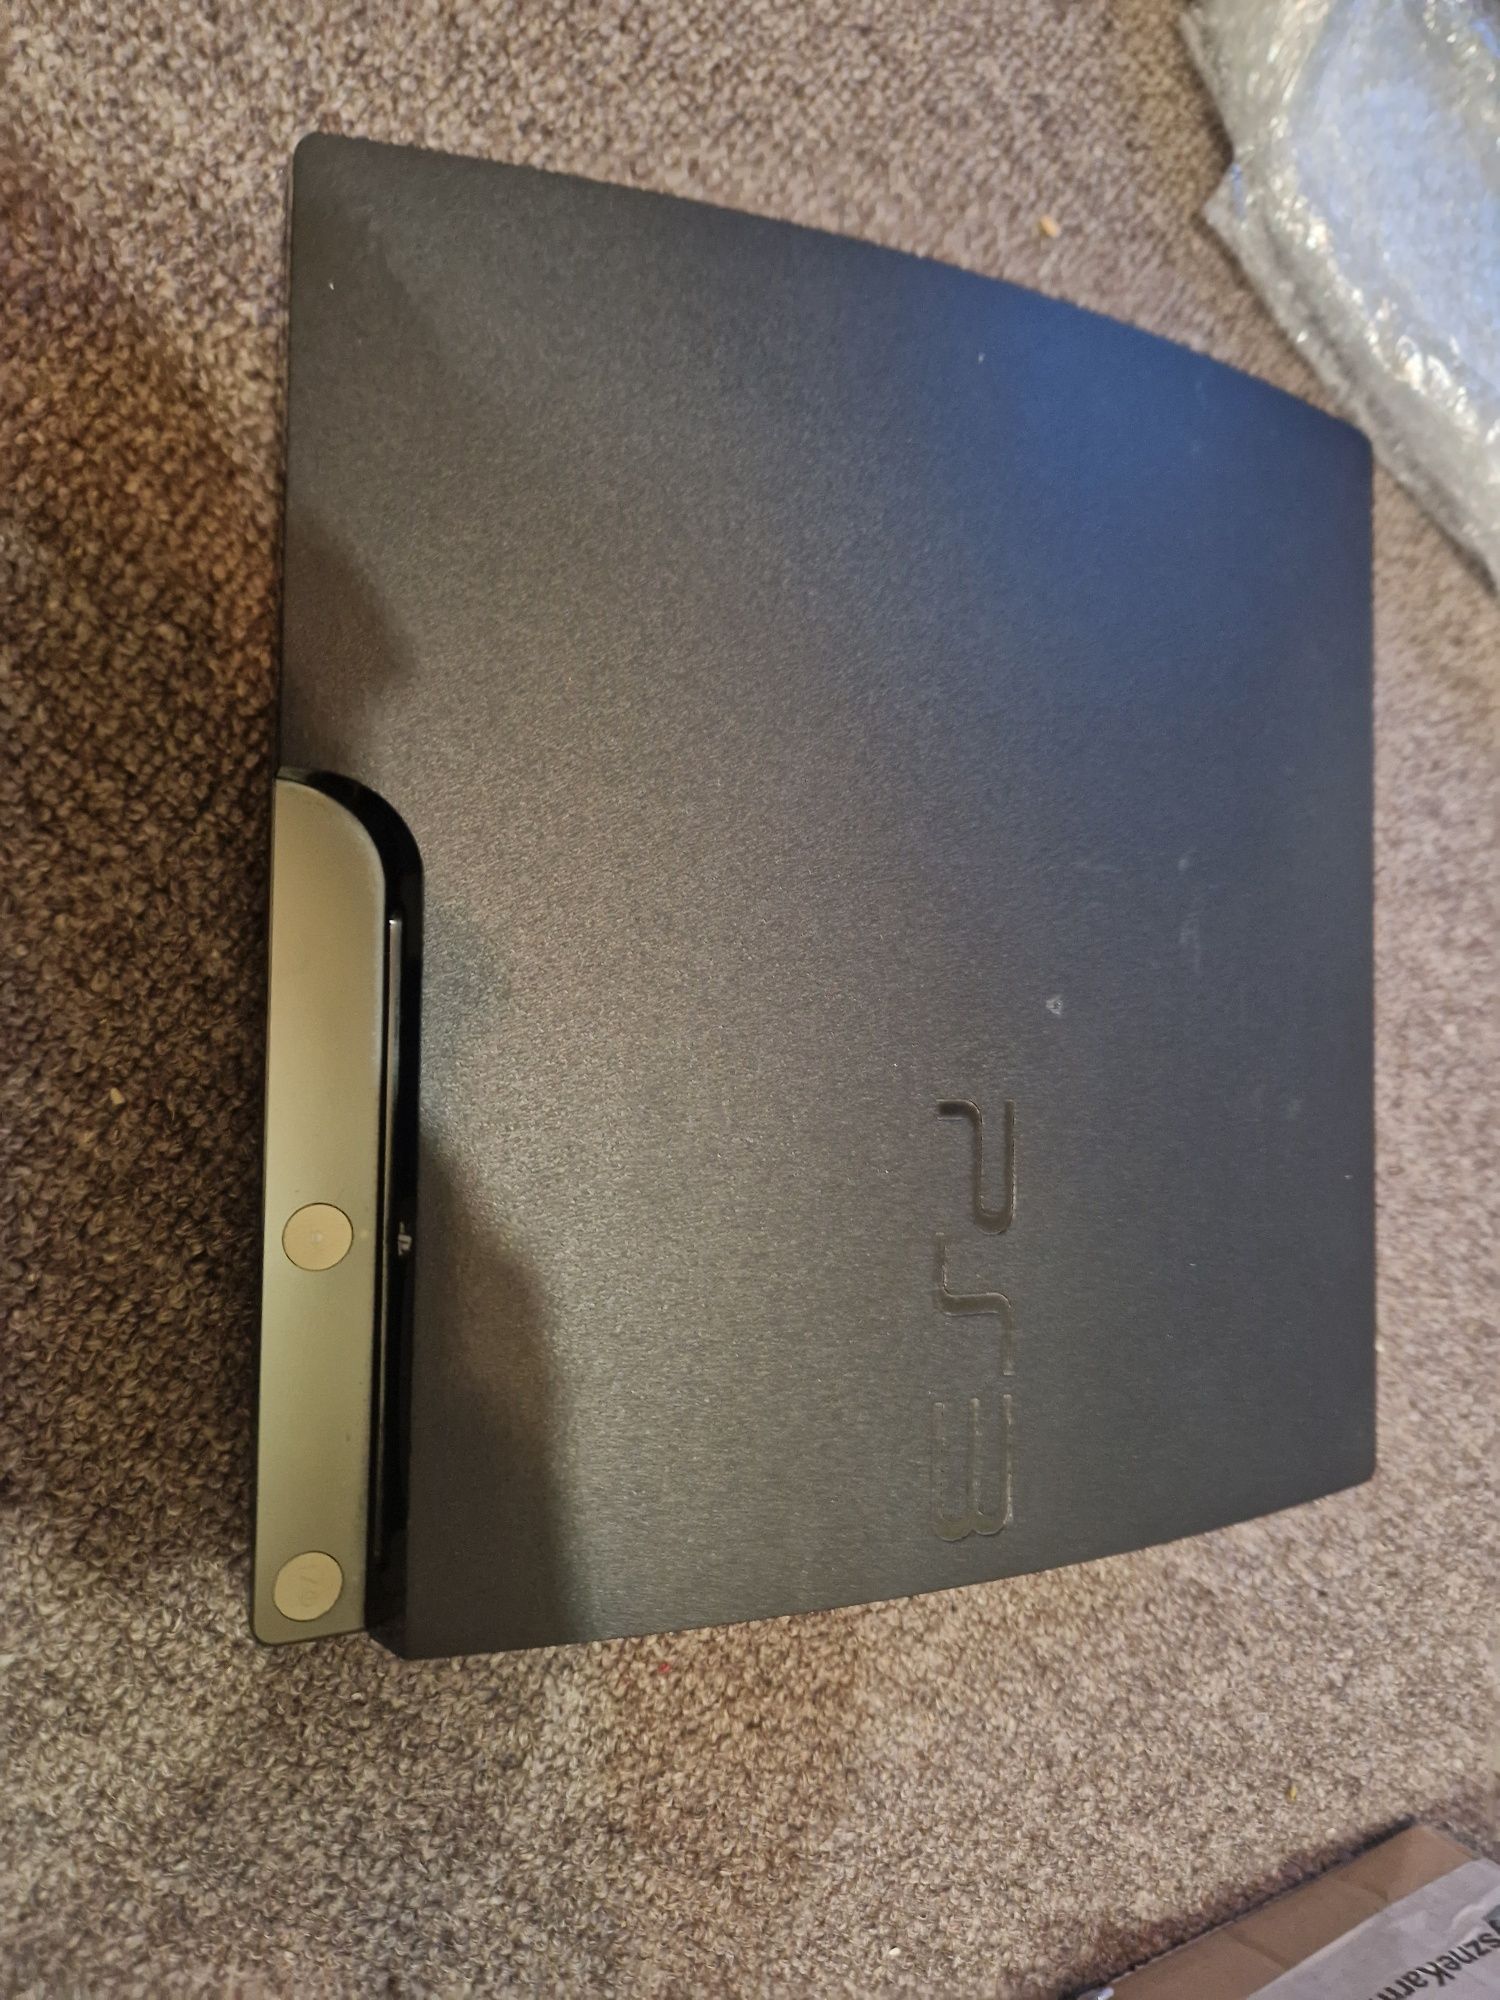 Konsola PlayStation 3 PS3 250 GB stan ideal